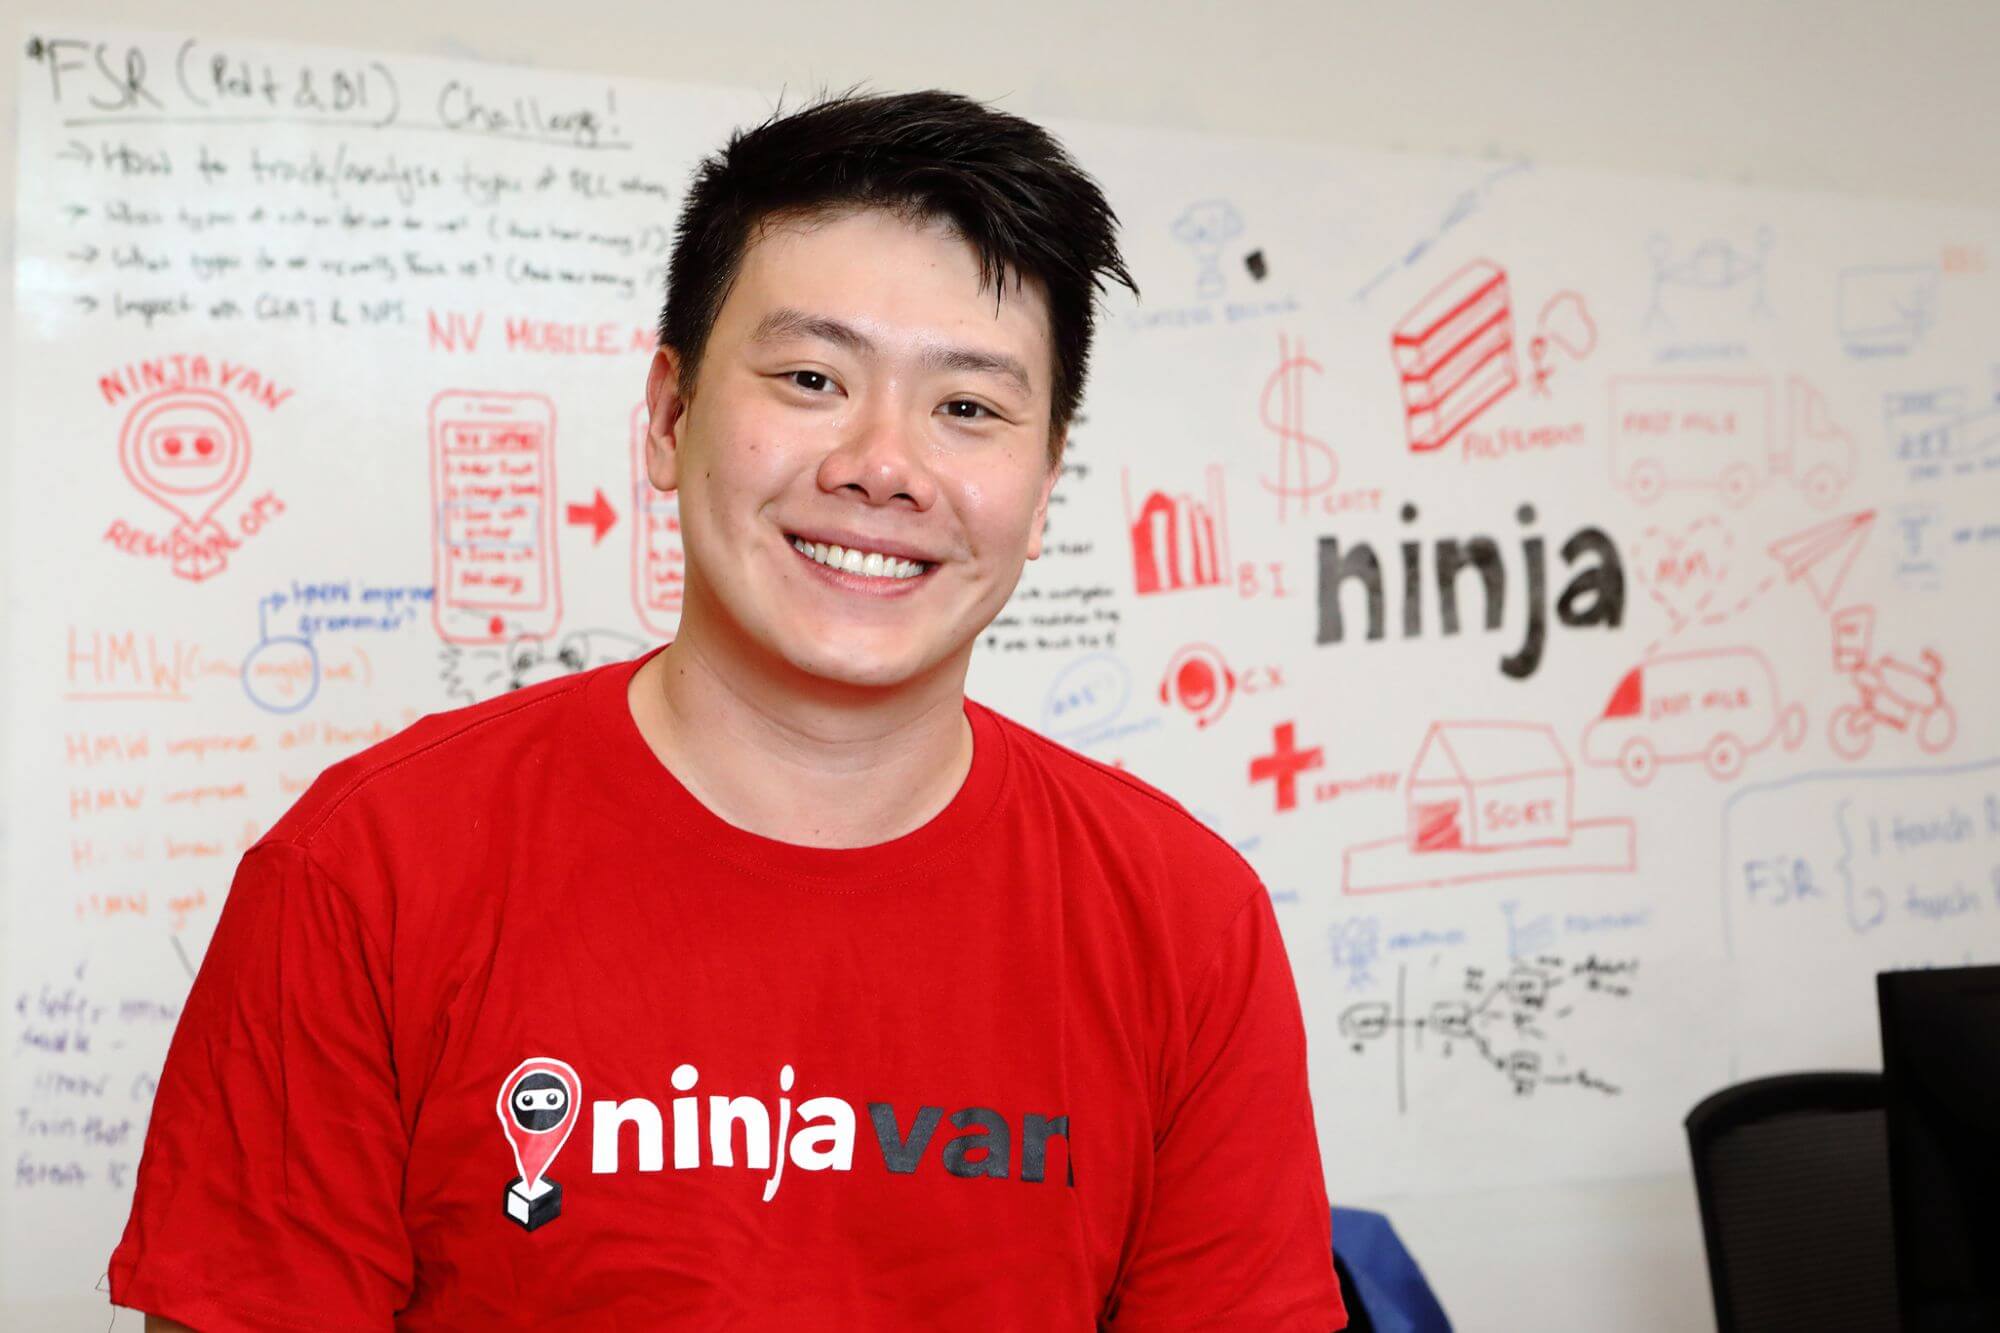 Ninja Van Founder (October 2021) Read Who Is Behind It!